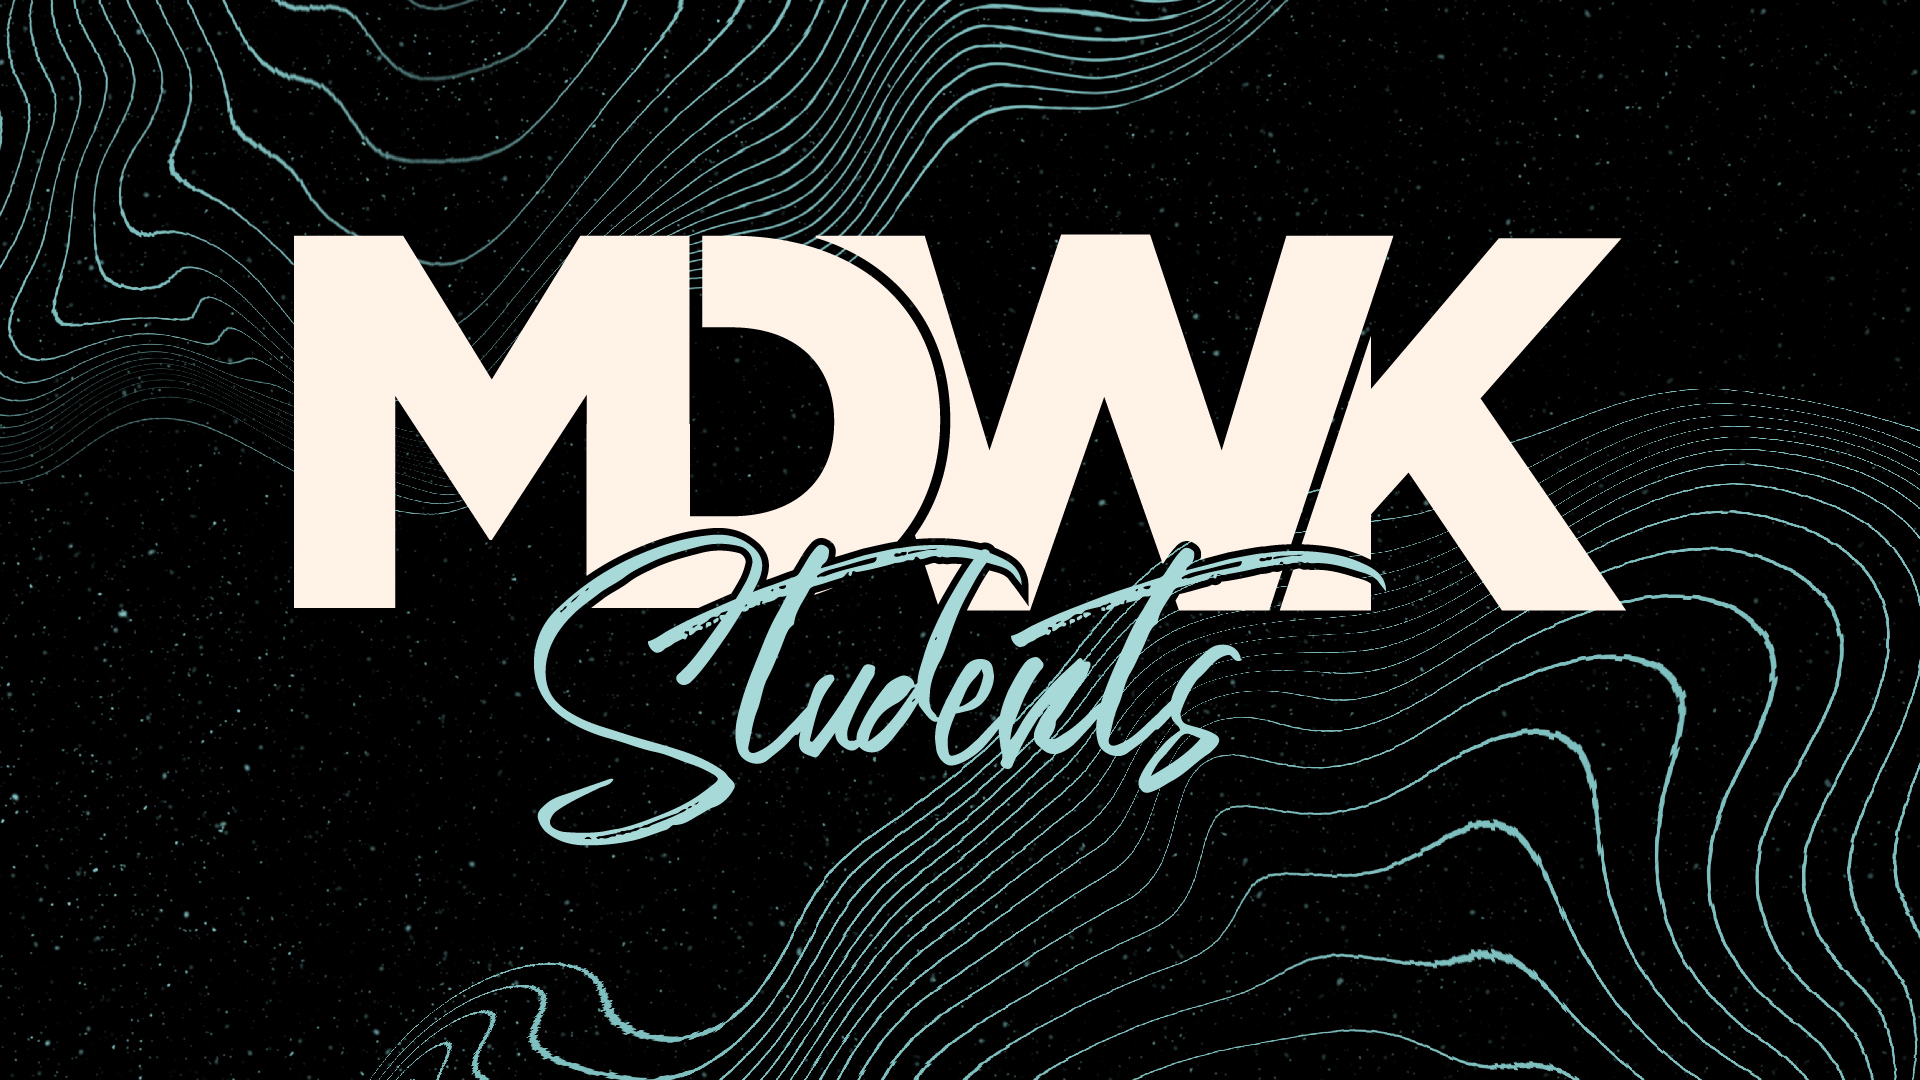 mdwk-logo-options-2-04